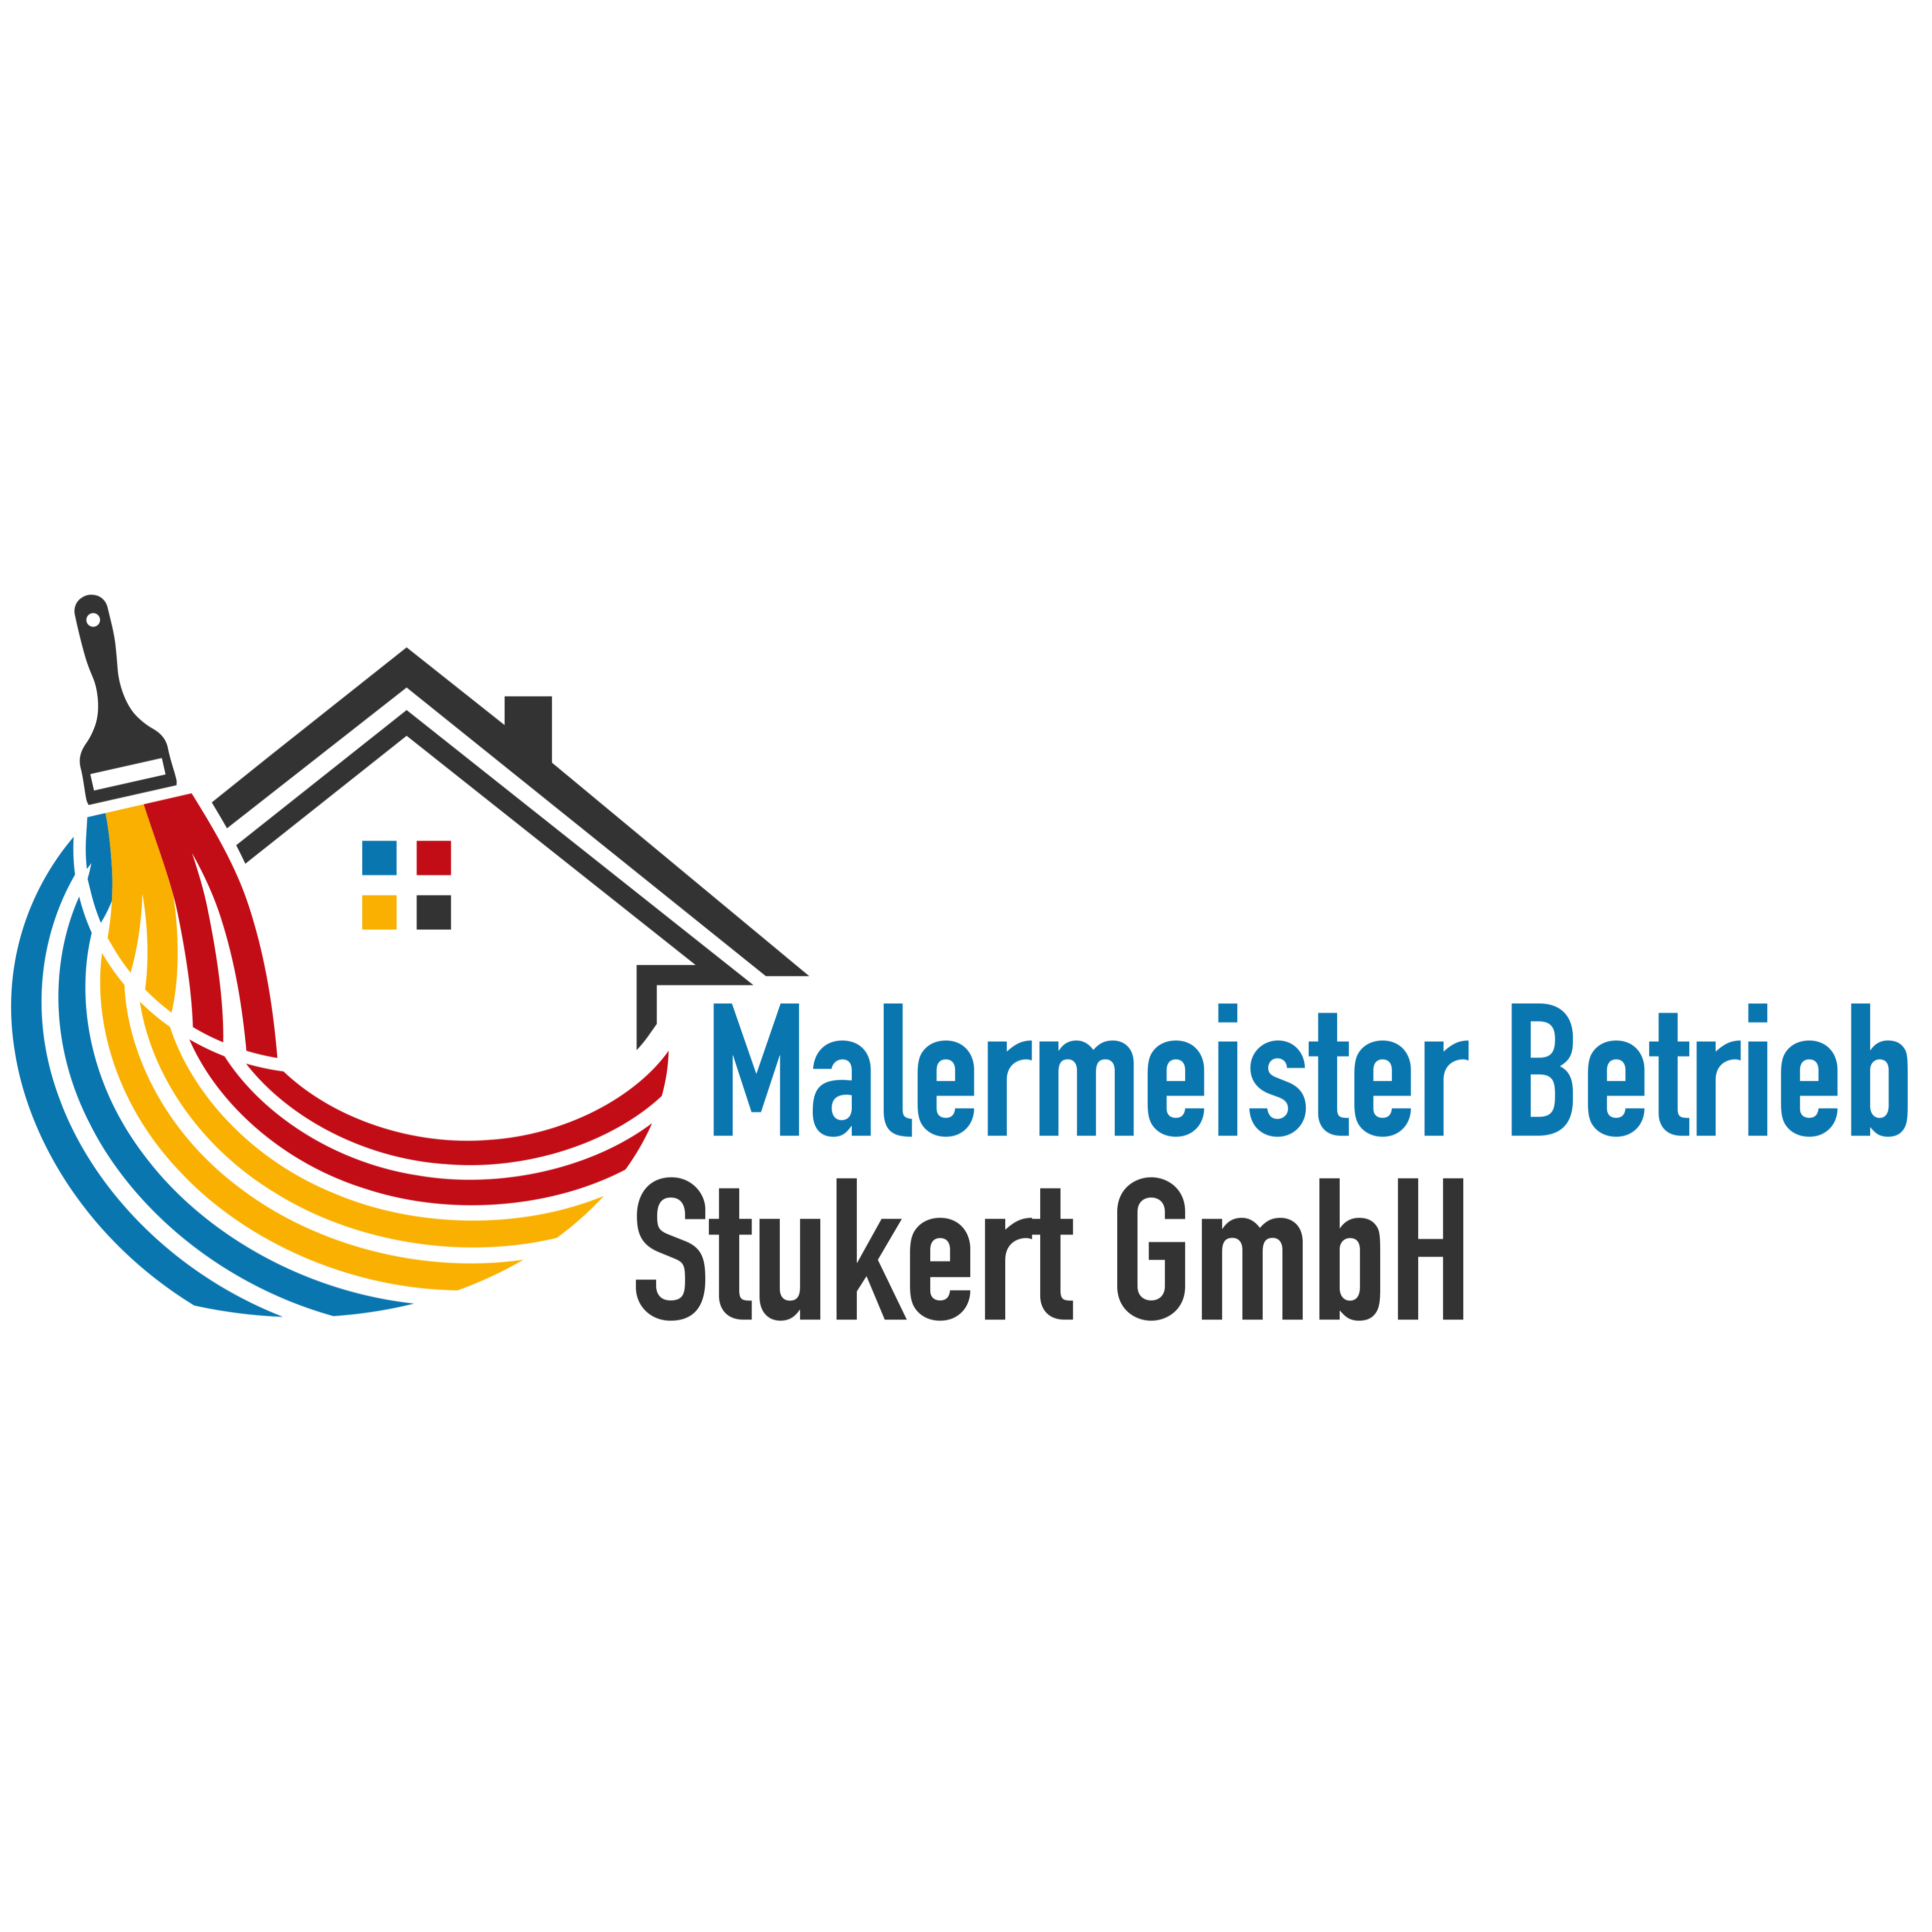 Malermeister Betrieb Stukert GmbH in Cloppenburg - Logo